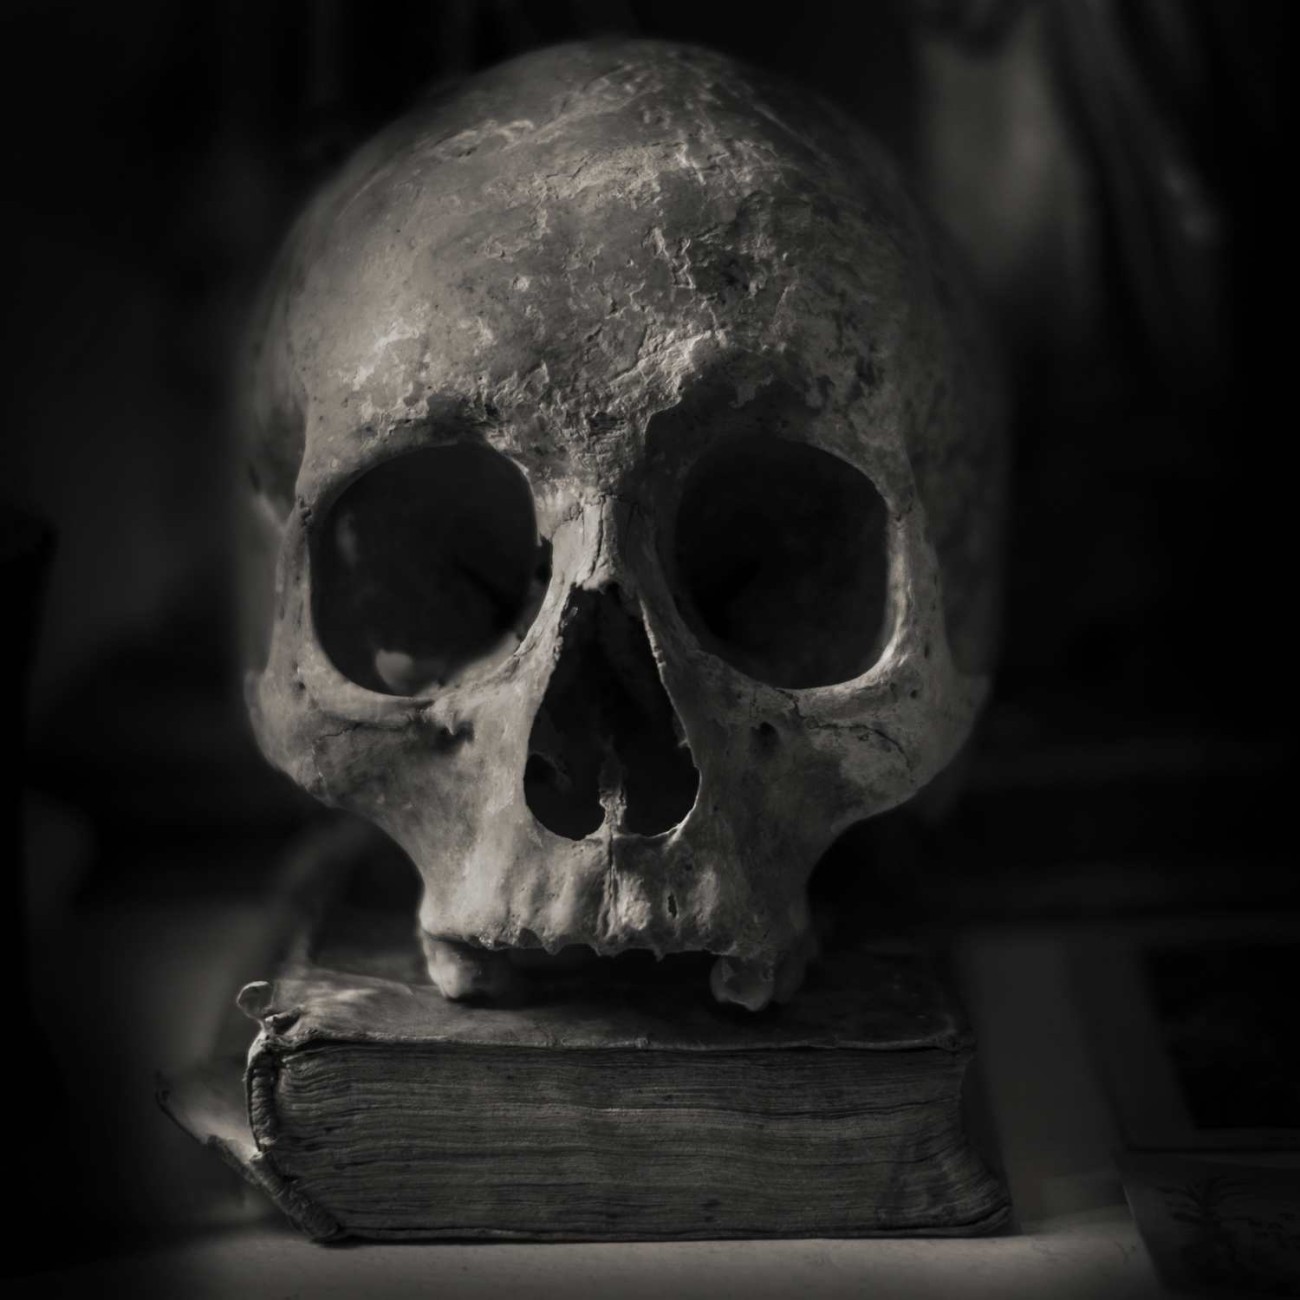 Skull and book, Monastary of Valdemossa, Spain, 2014